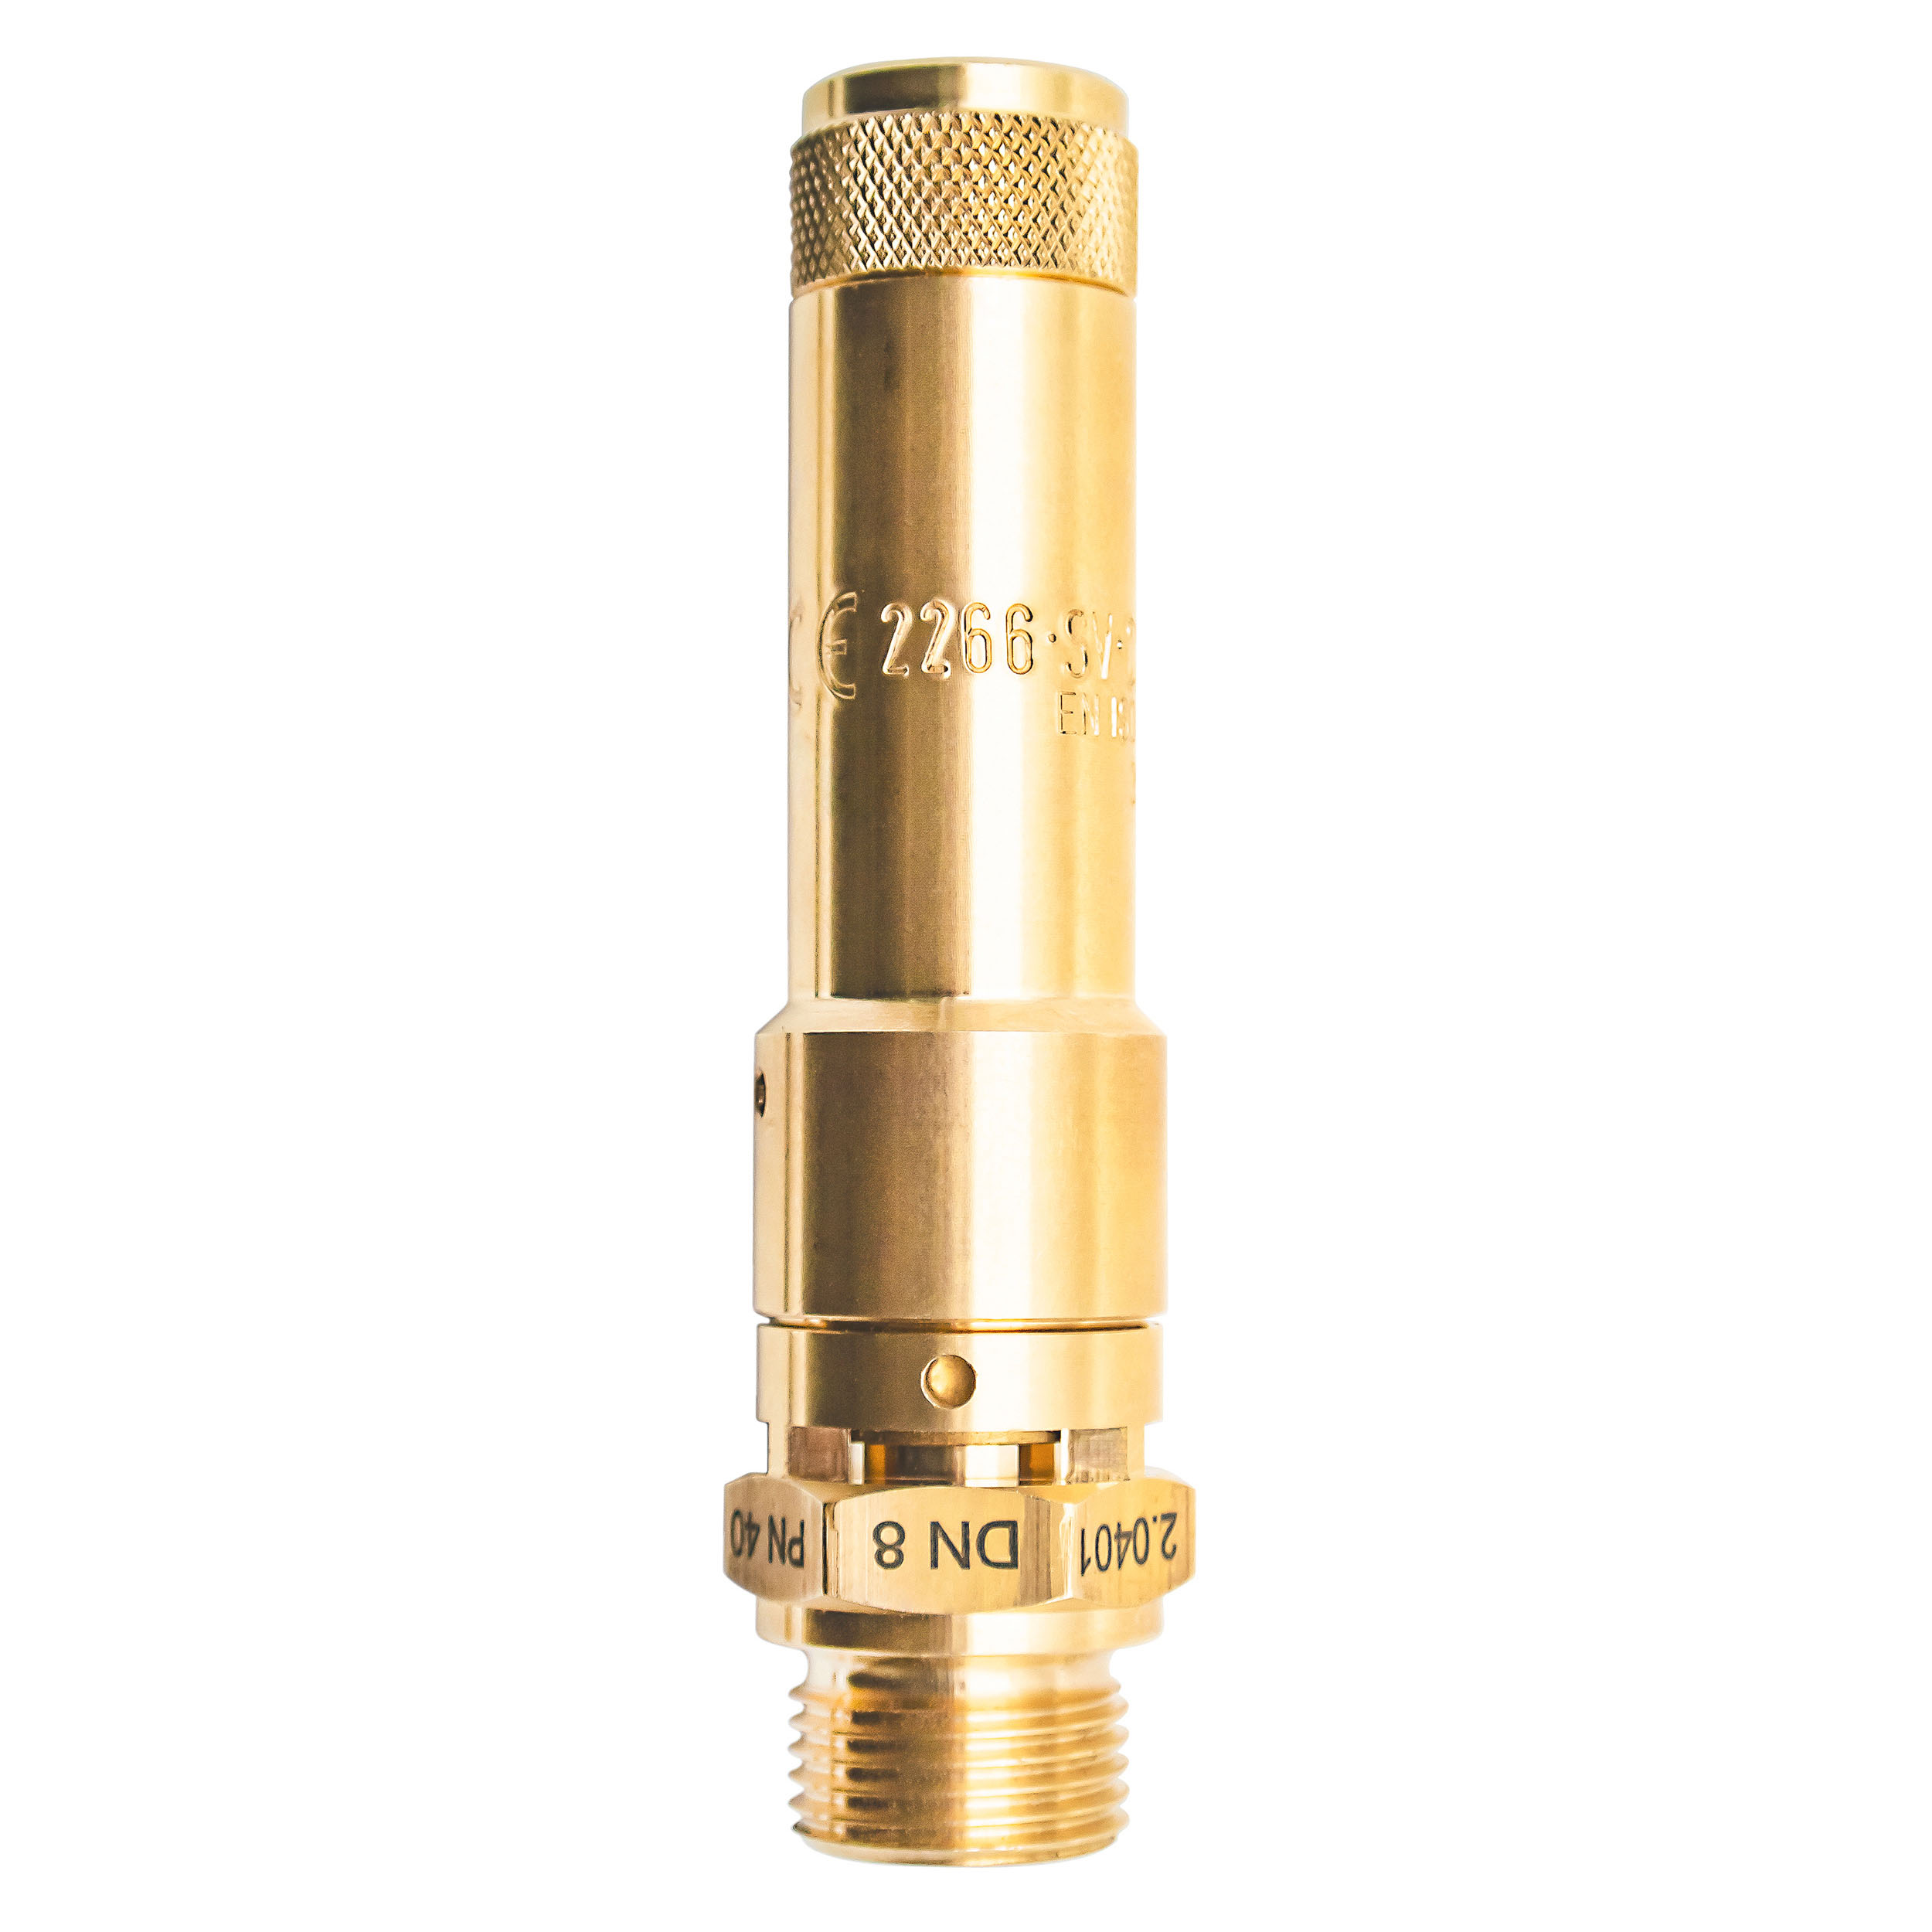 Savety valve component tested DN 8, G¼, set pressure: 7.3 bar (105,85 psi)